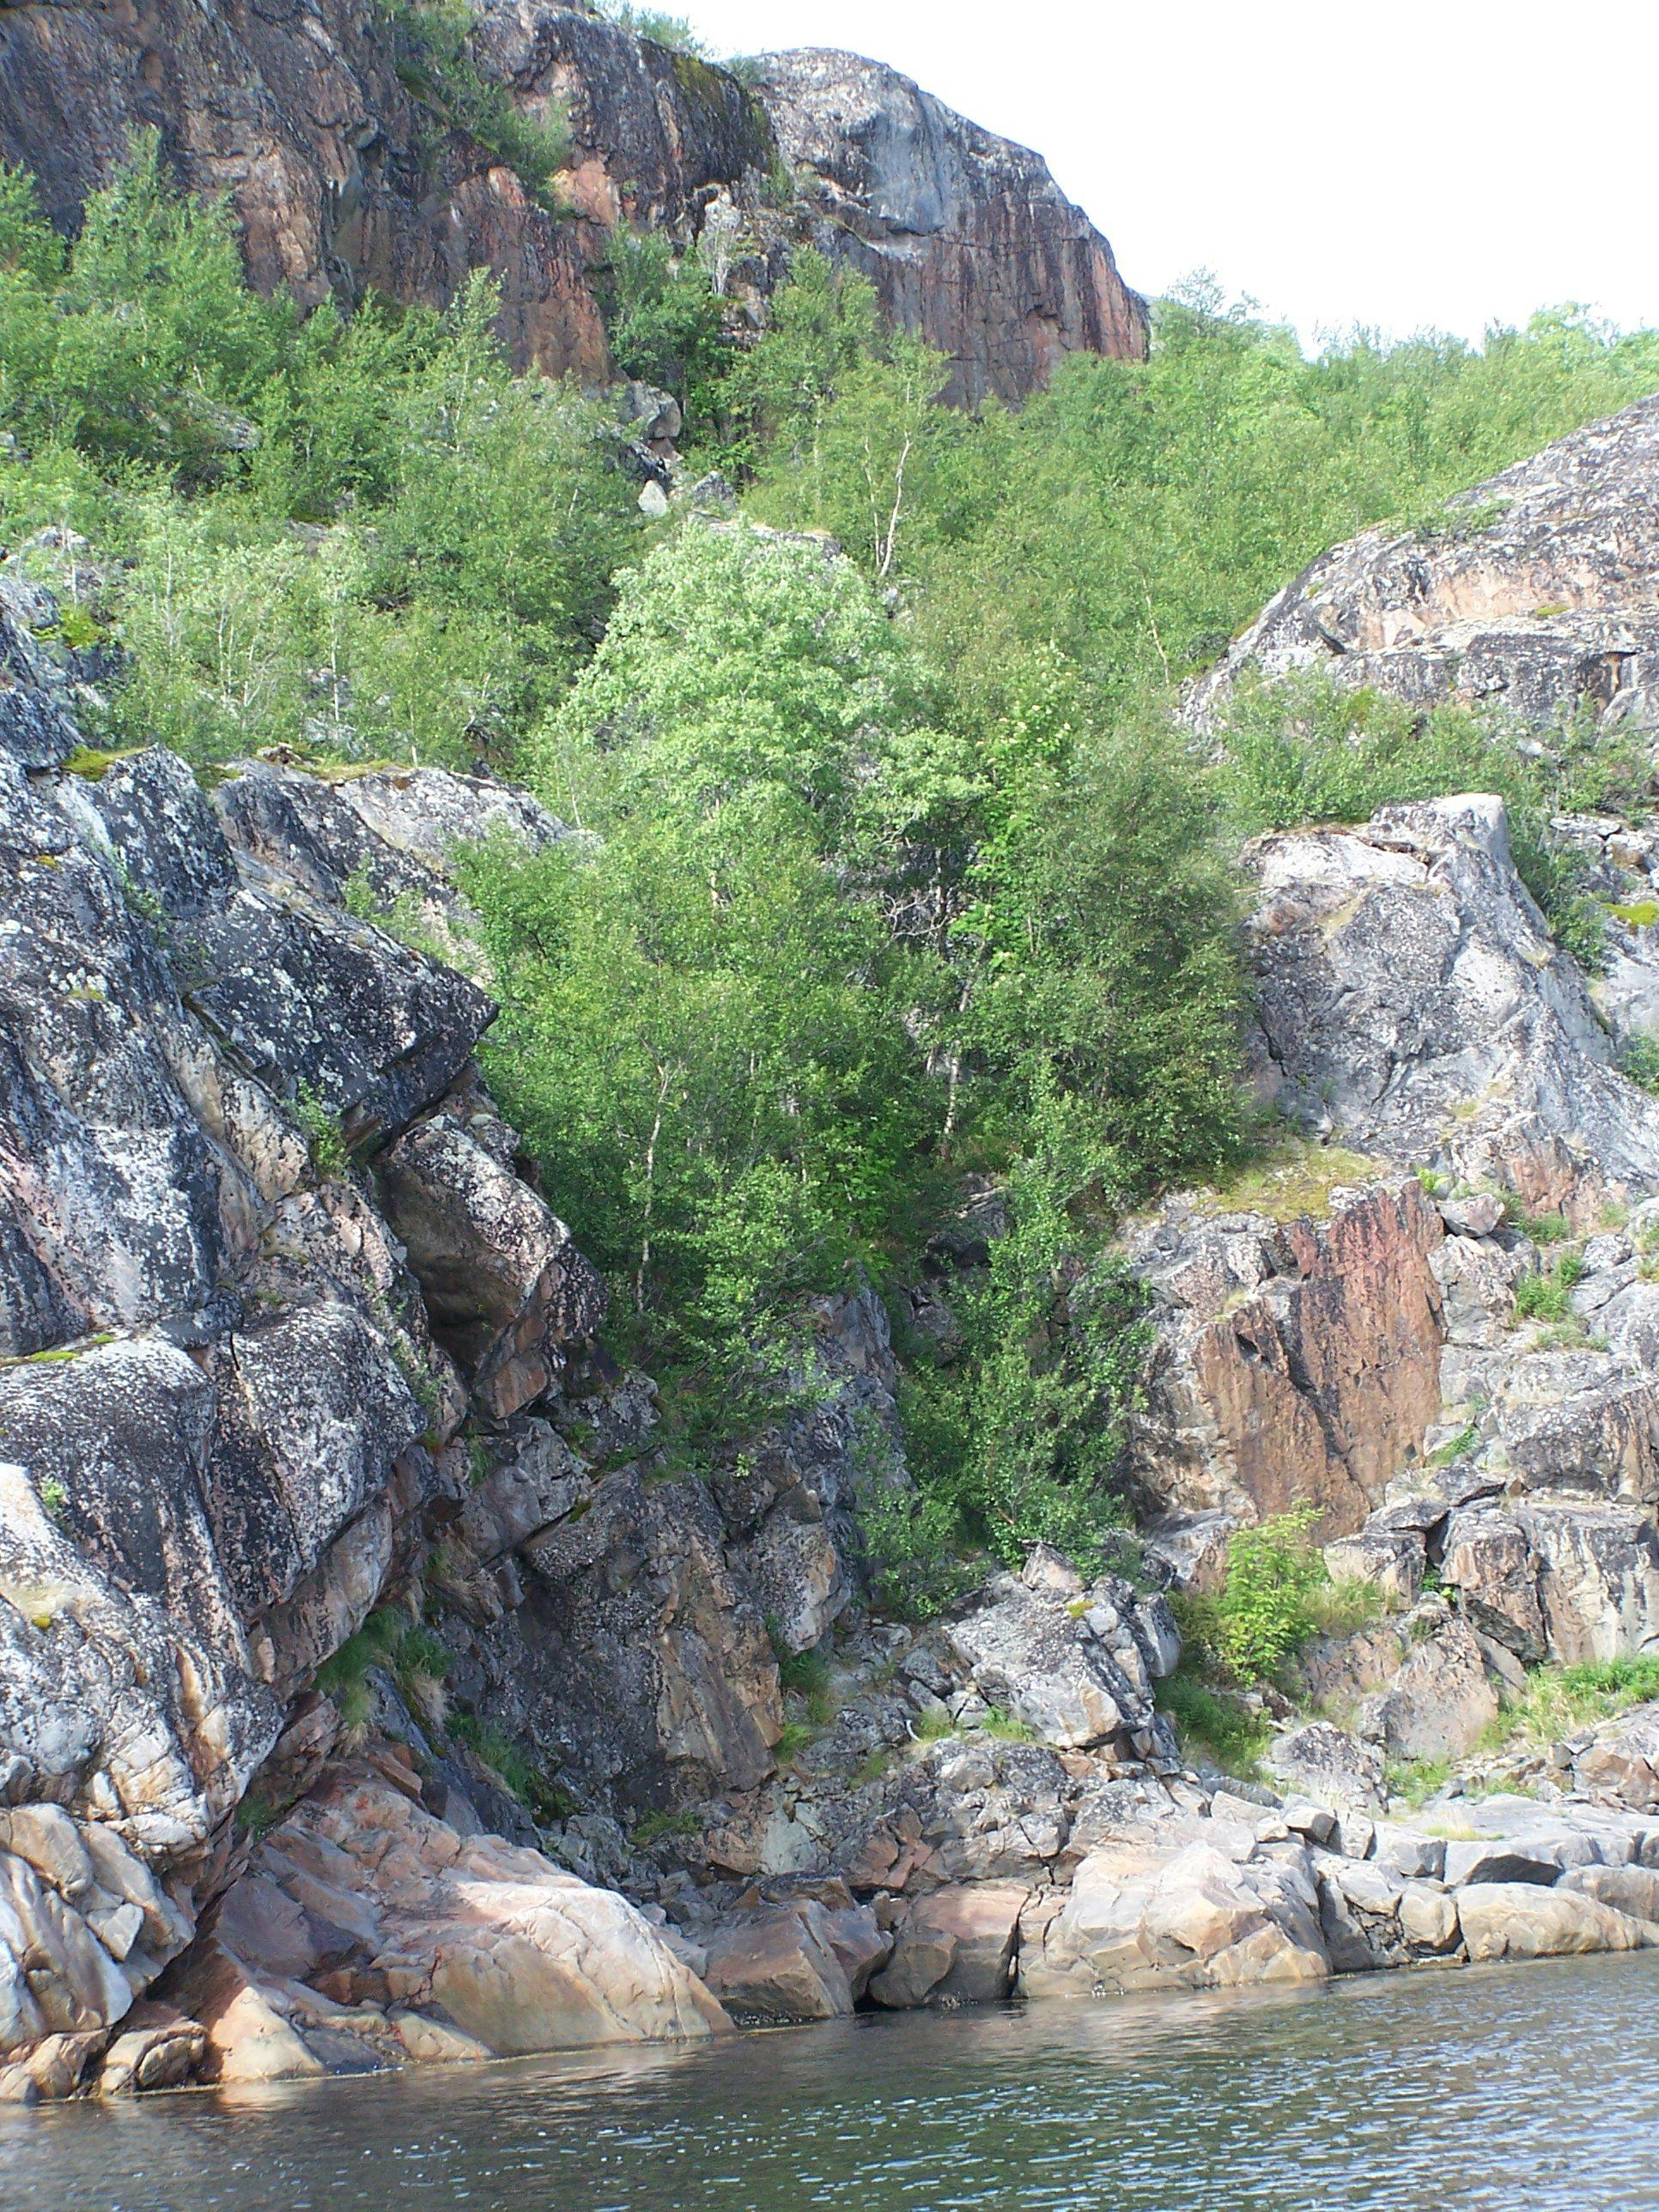 View of Rocks on Landscape